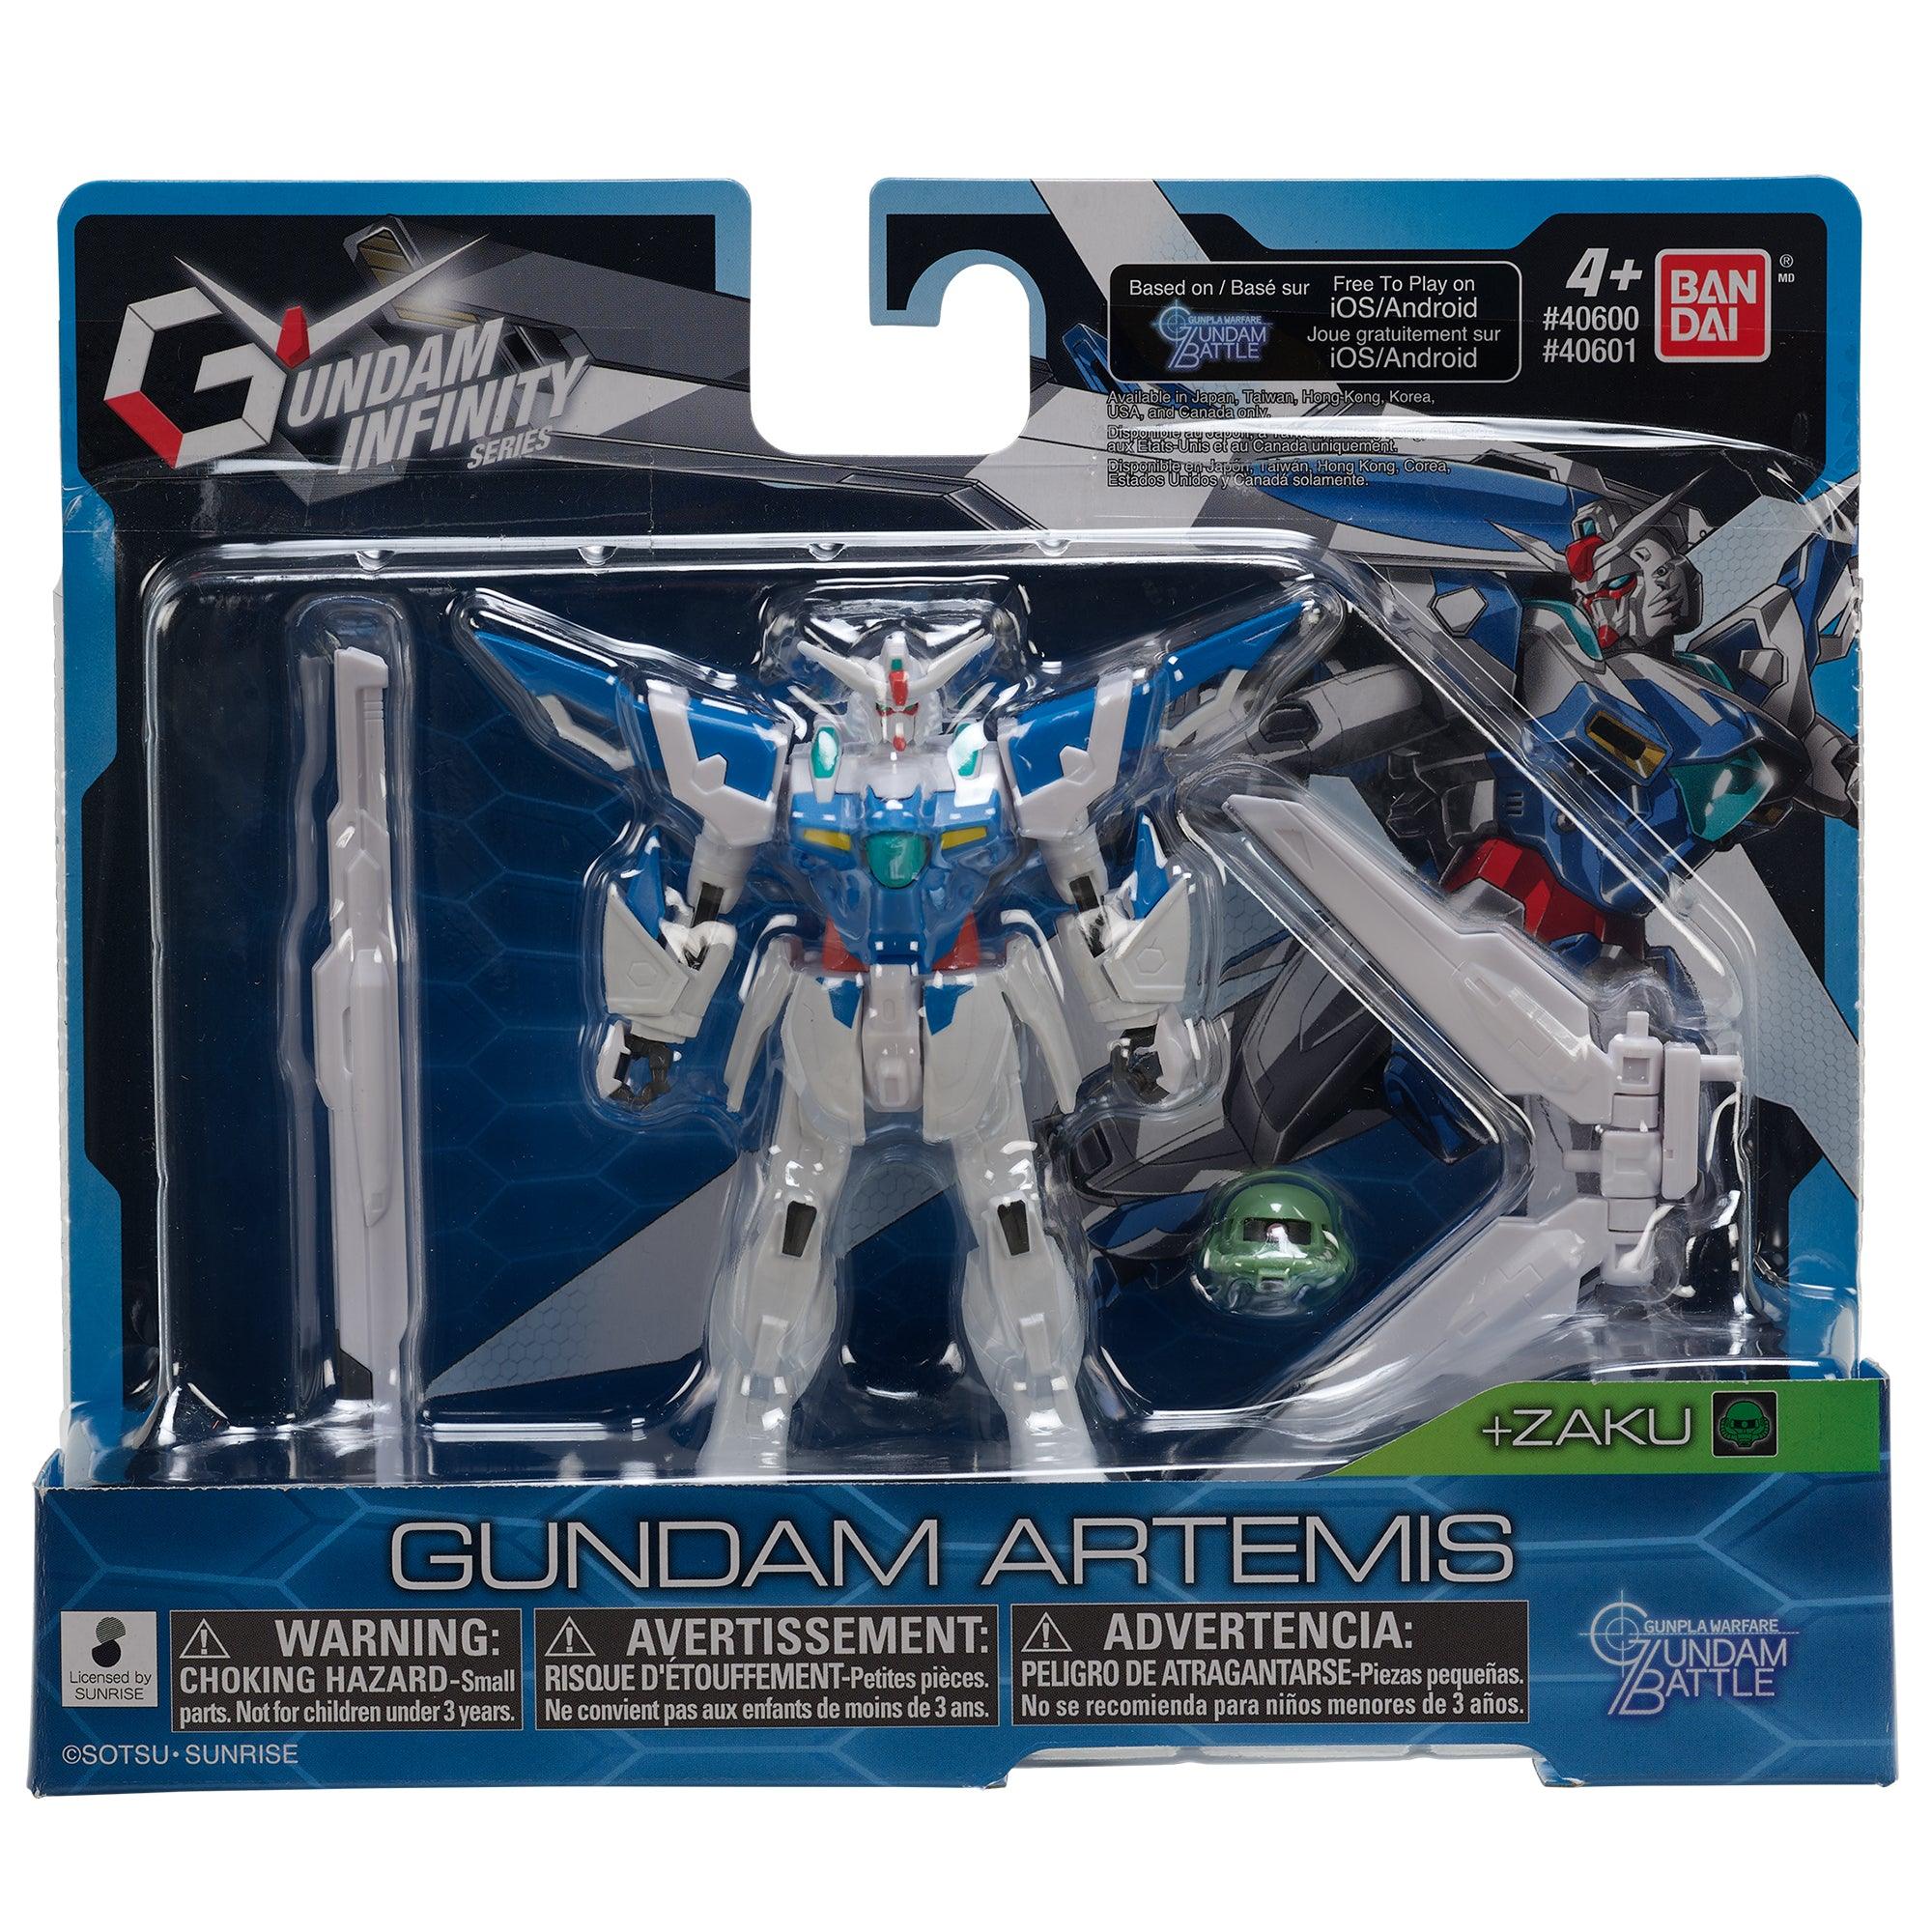 Gundam Infinity Artemis - Want a New Gadget